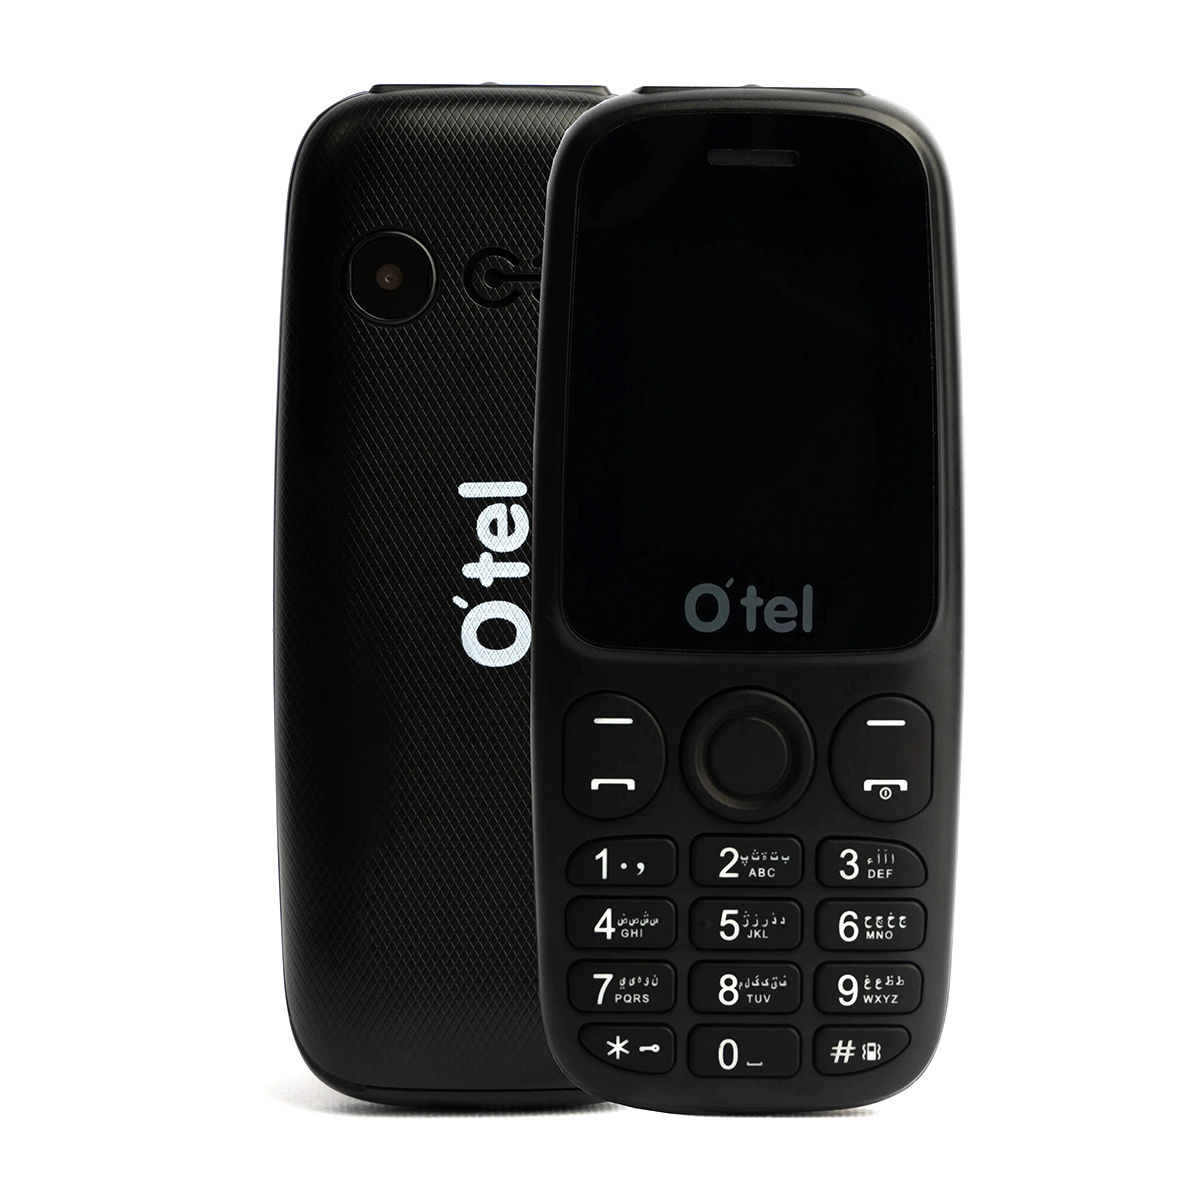 گوشی موبایل اوتل مدل F05 دو سیم کارت-مشکی